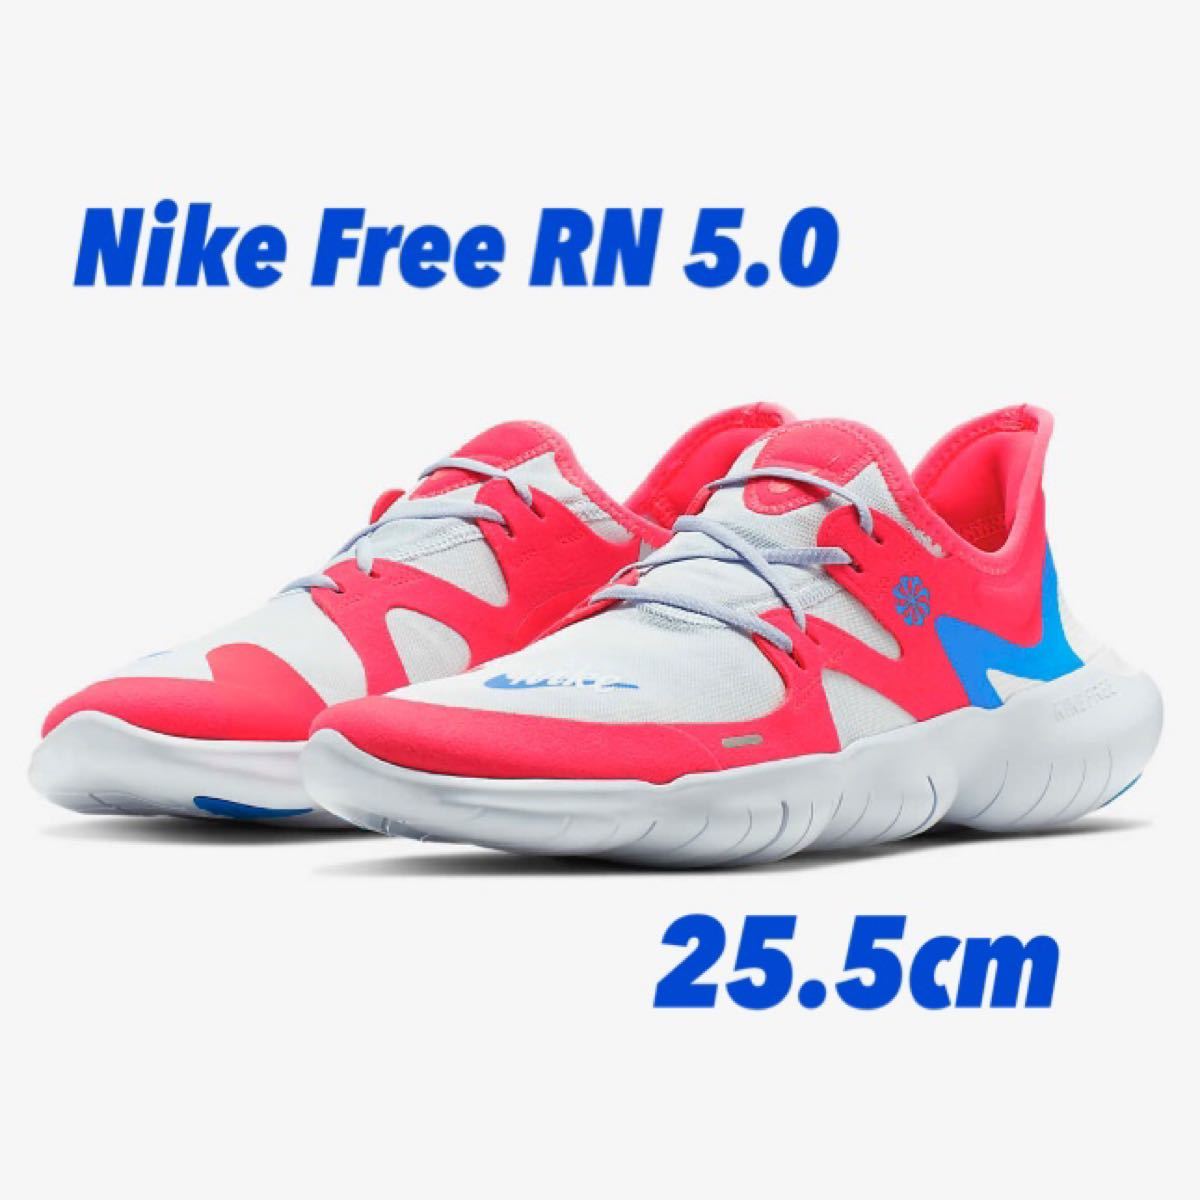 Nike Free RN 5.0 25.5cm 短距離走用ランニングシューズ